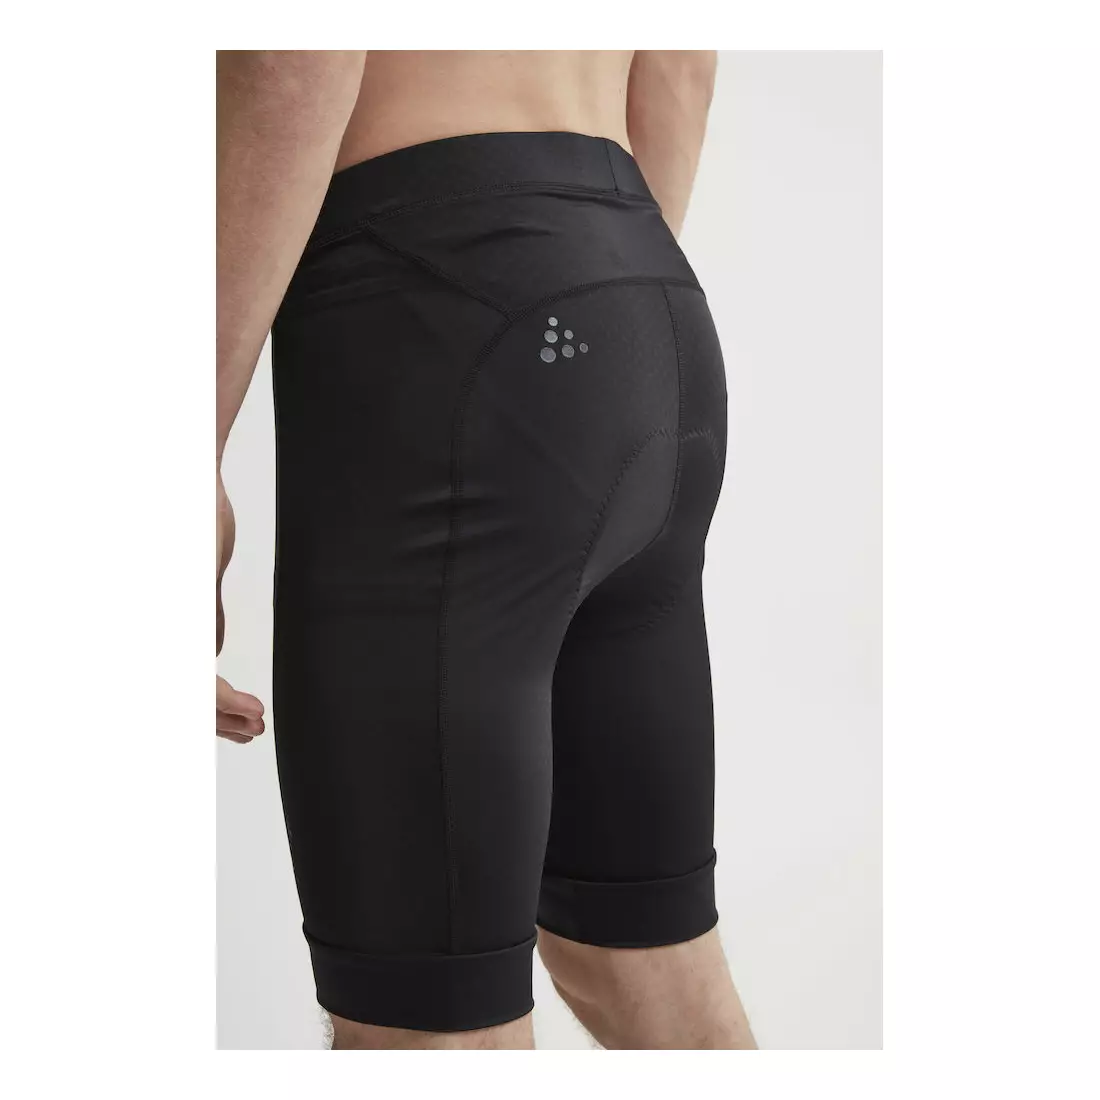 CRAFT RISE men's cycling shorts, black 1906100-999999